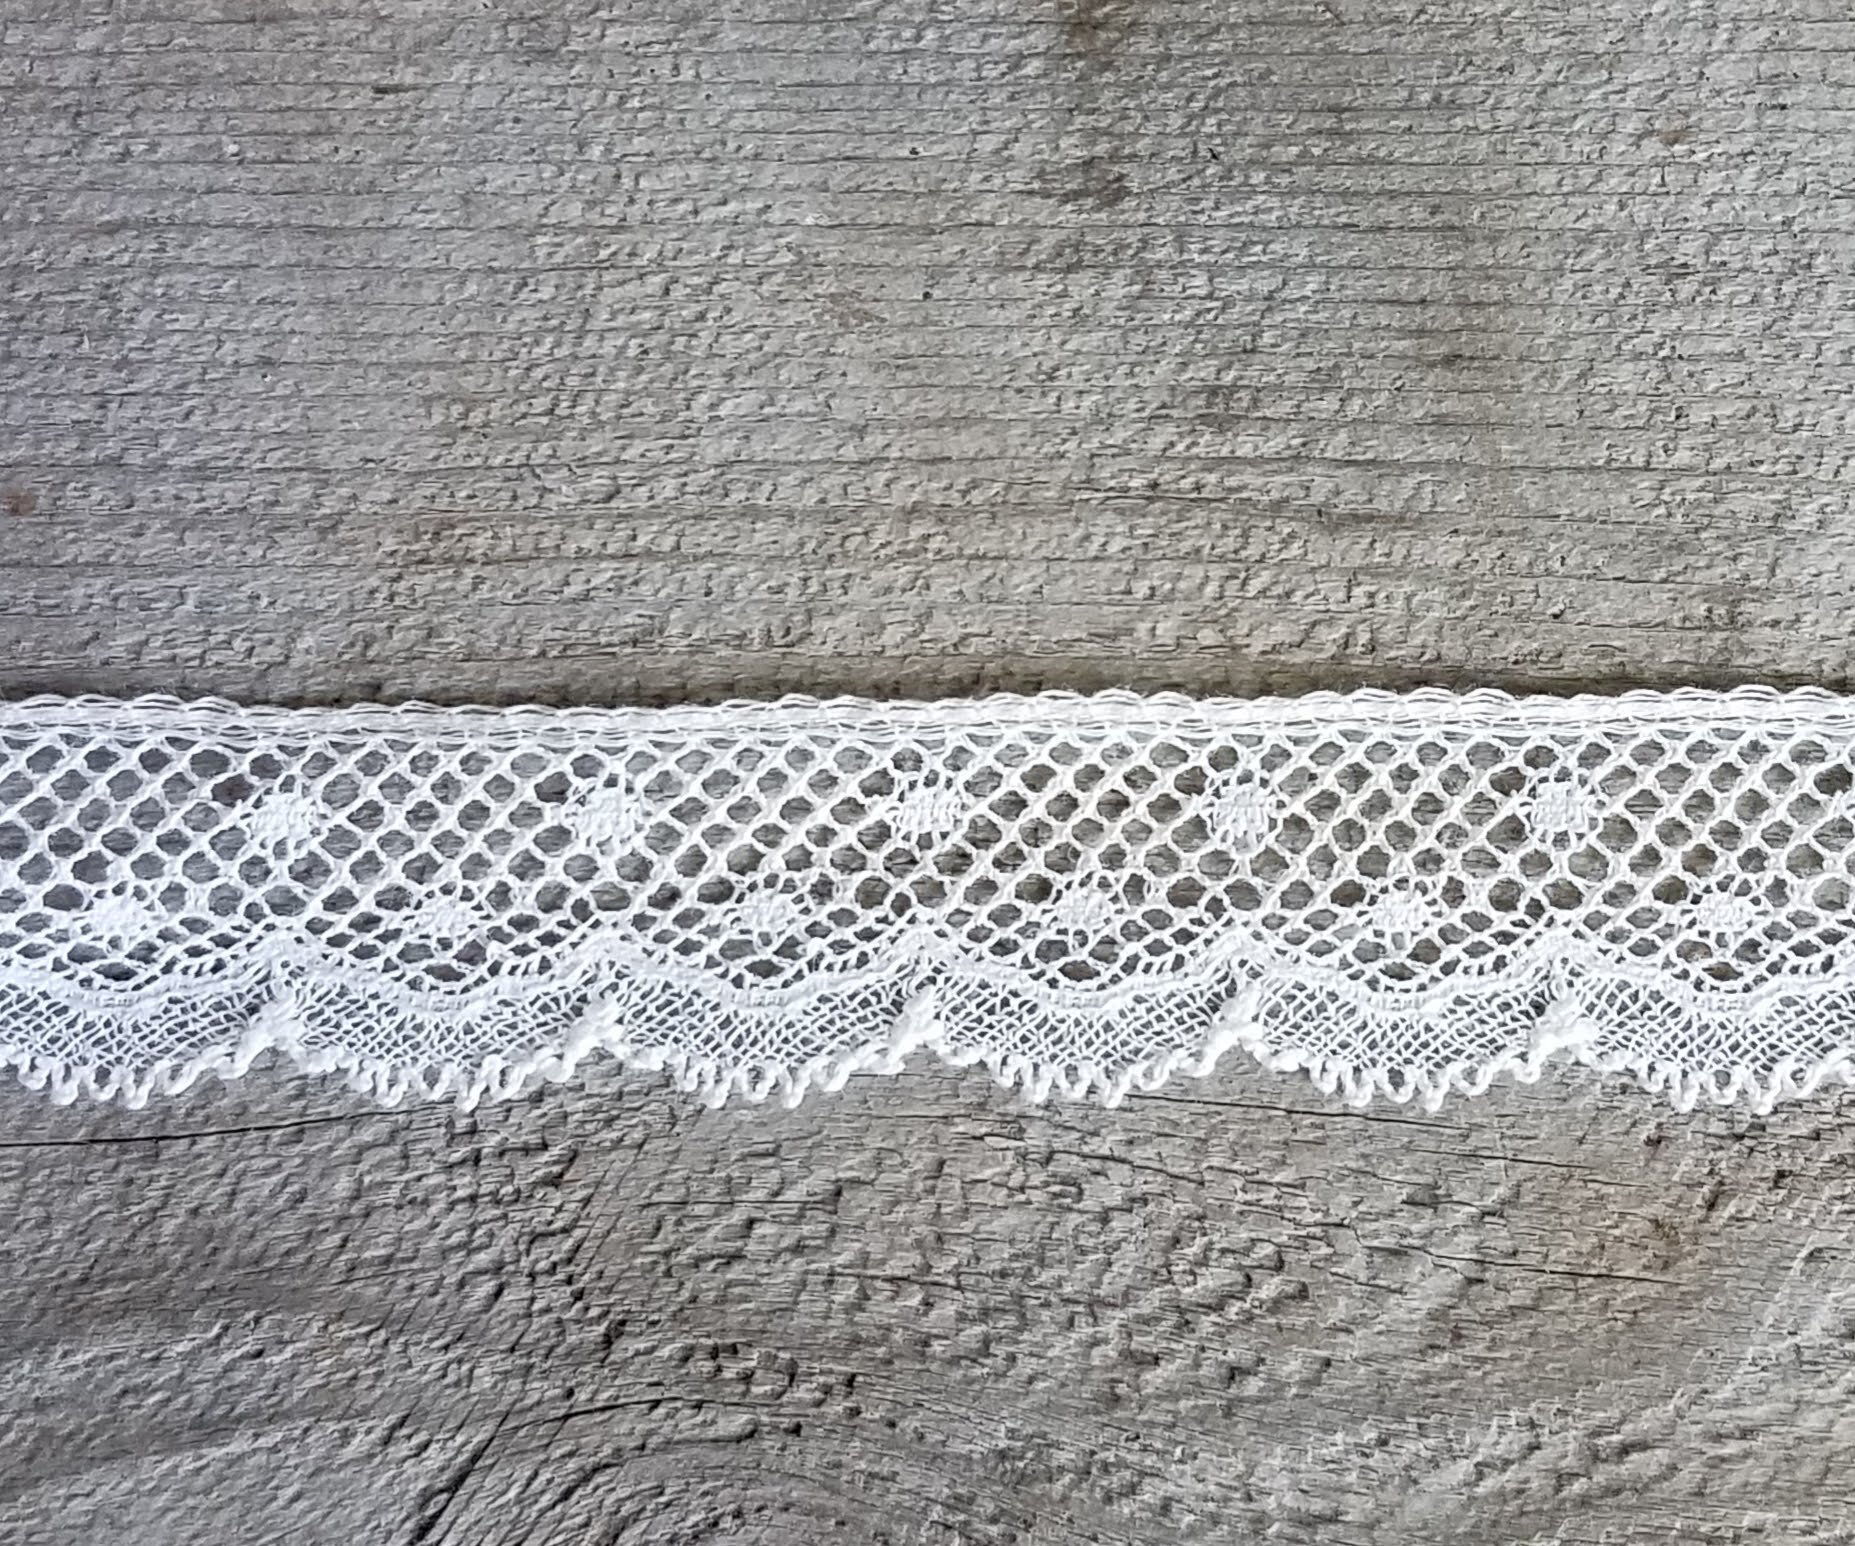 French trim, scalloped - fine cotton lace to trim garments